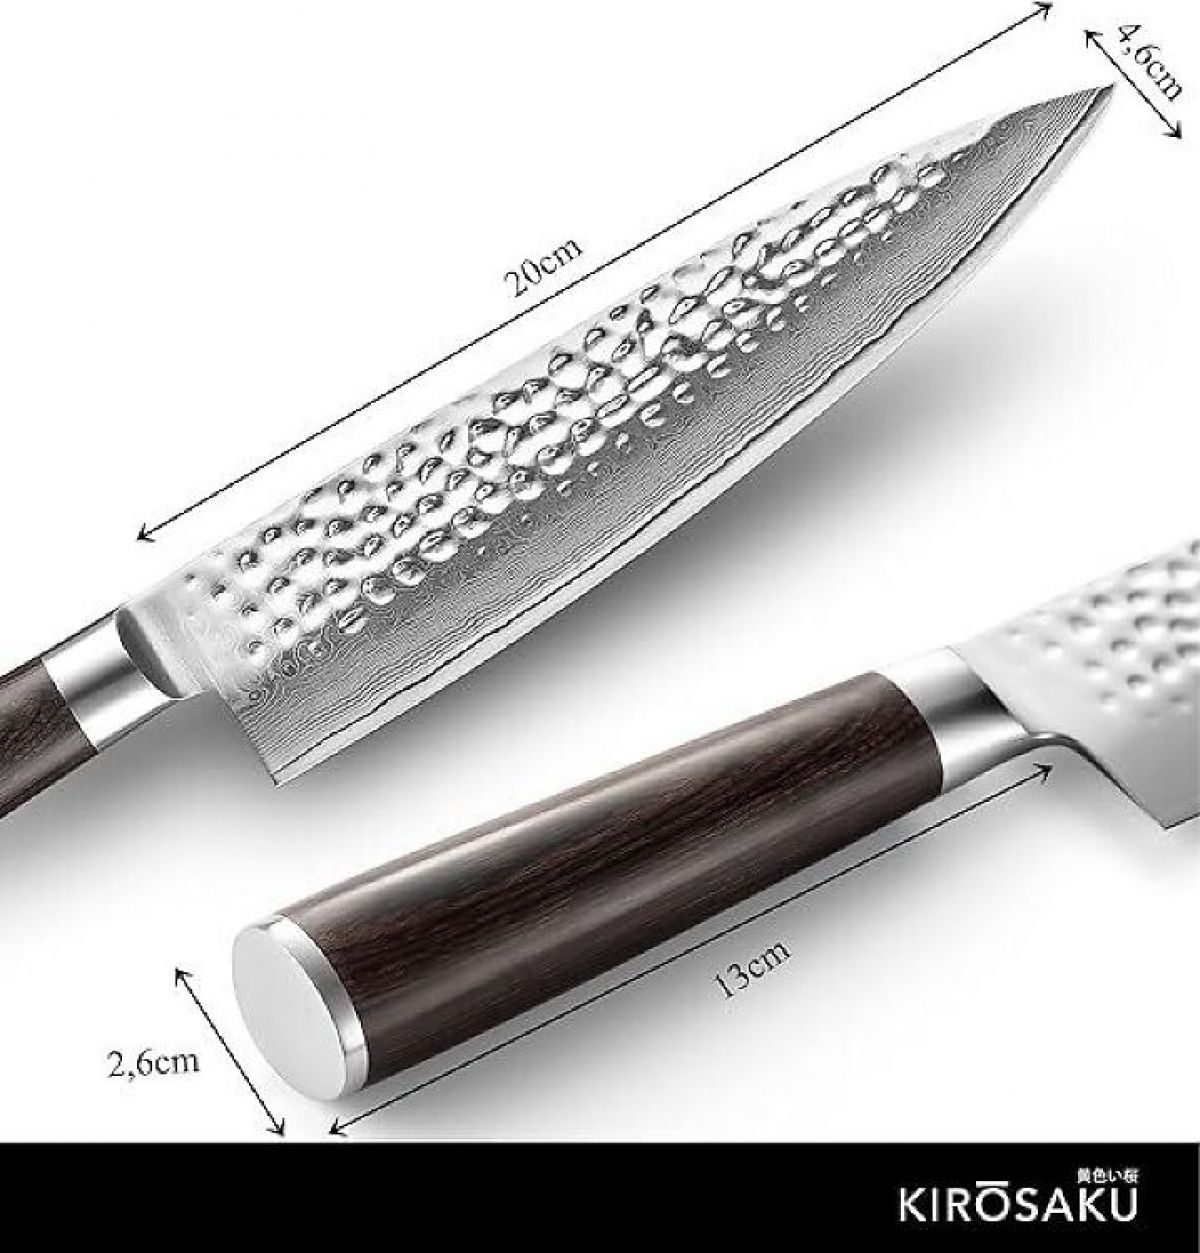 Premium knife Kirosaku, 20cm